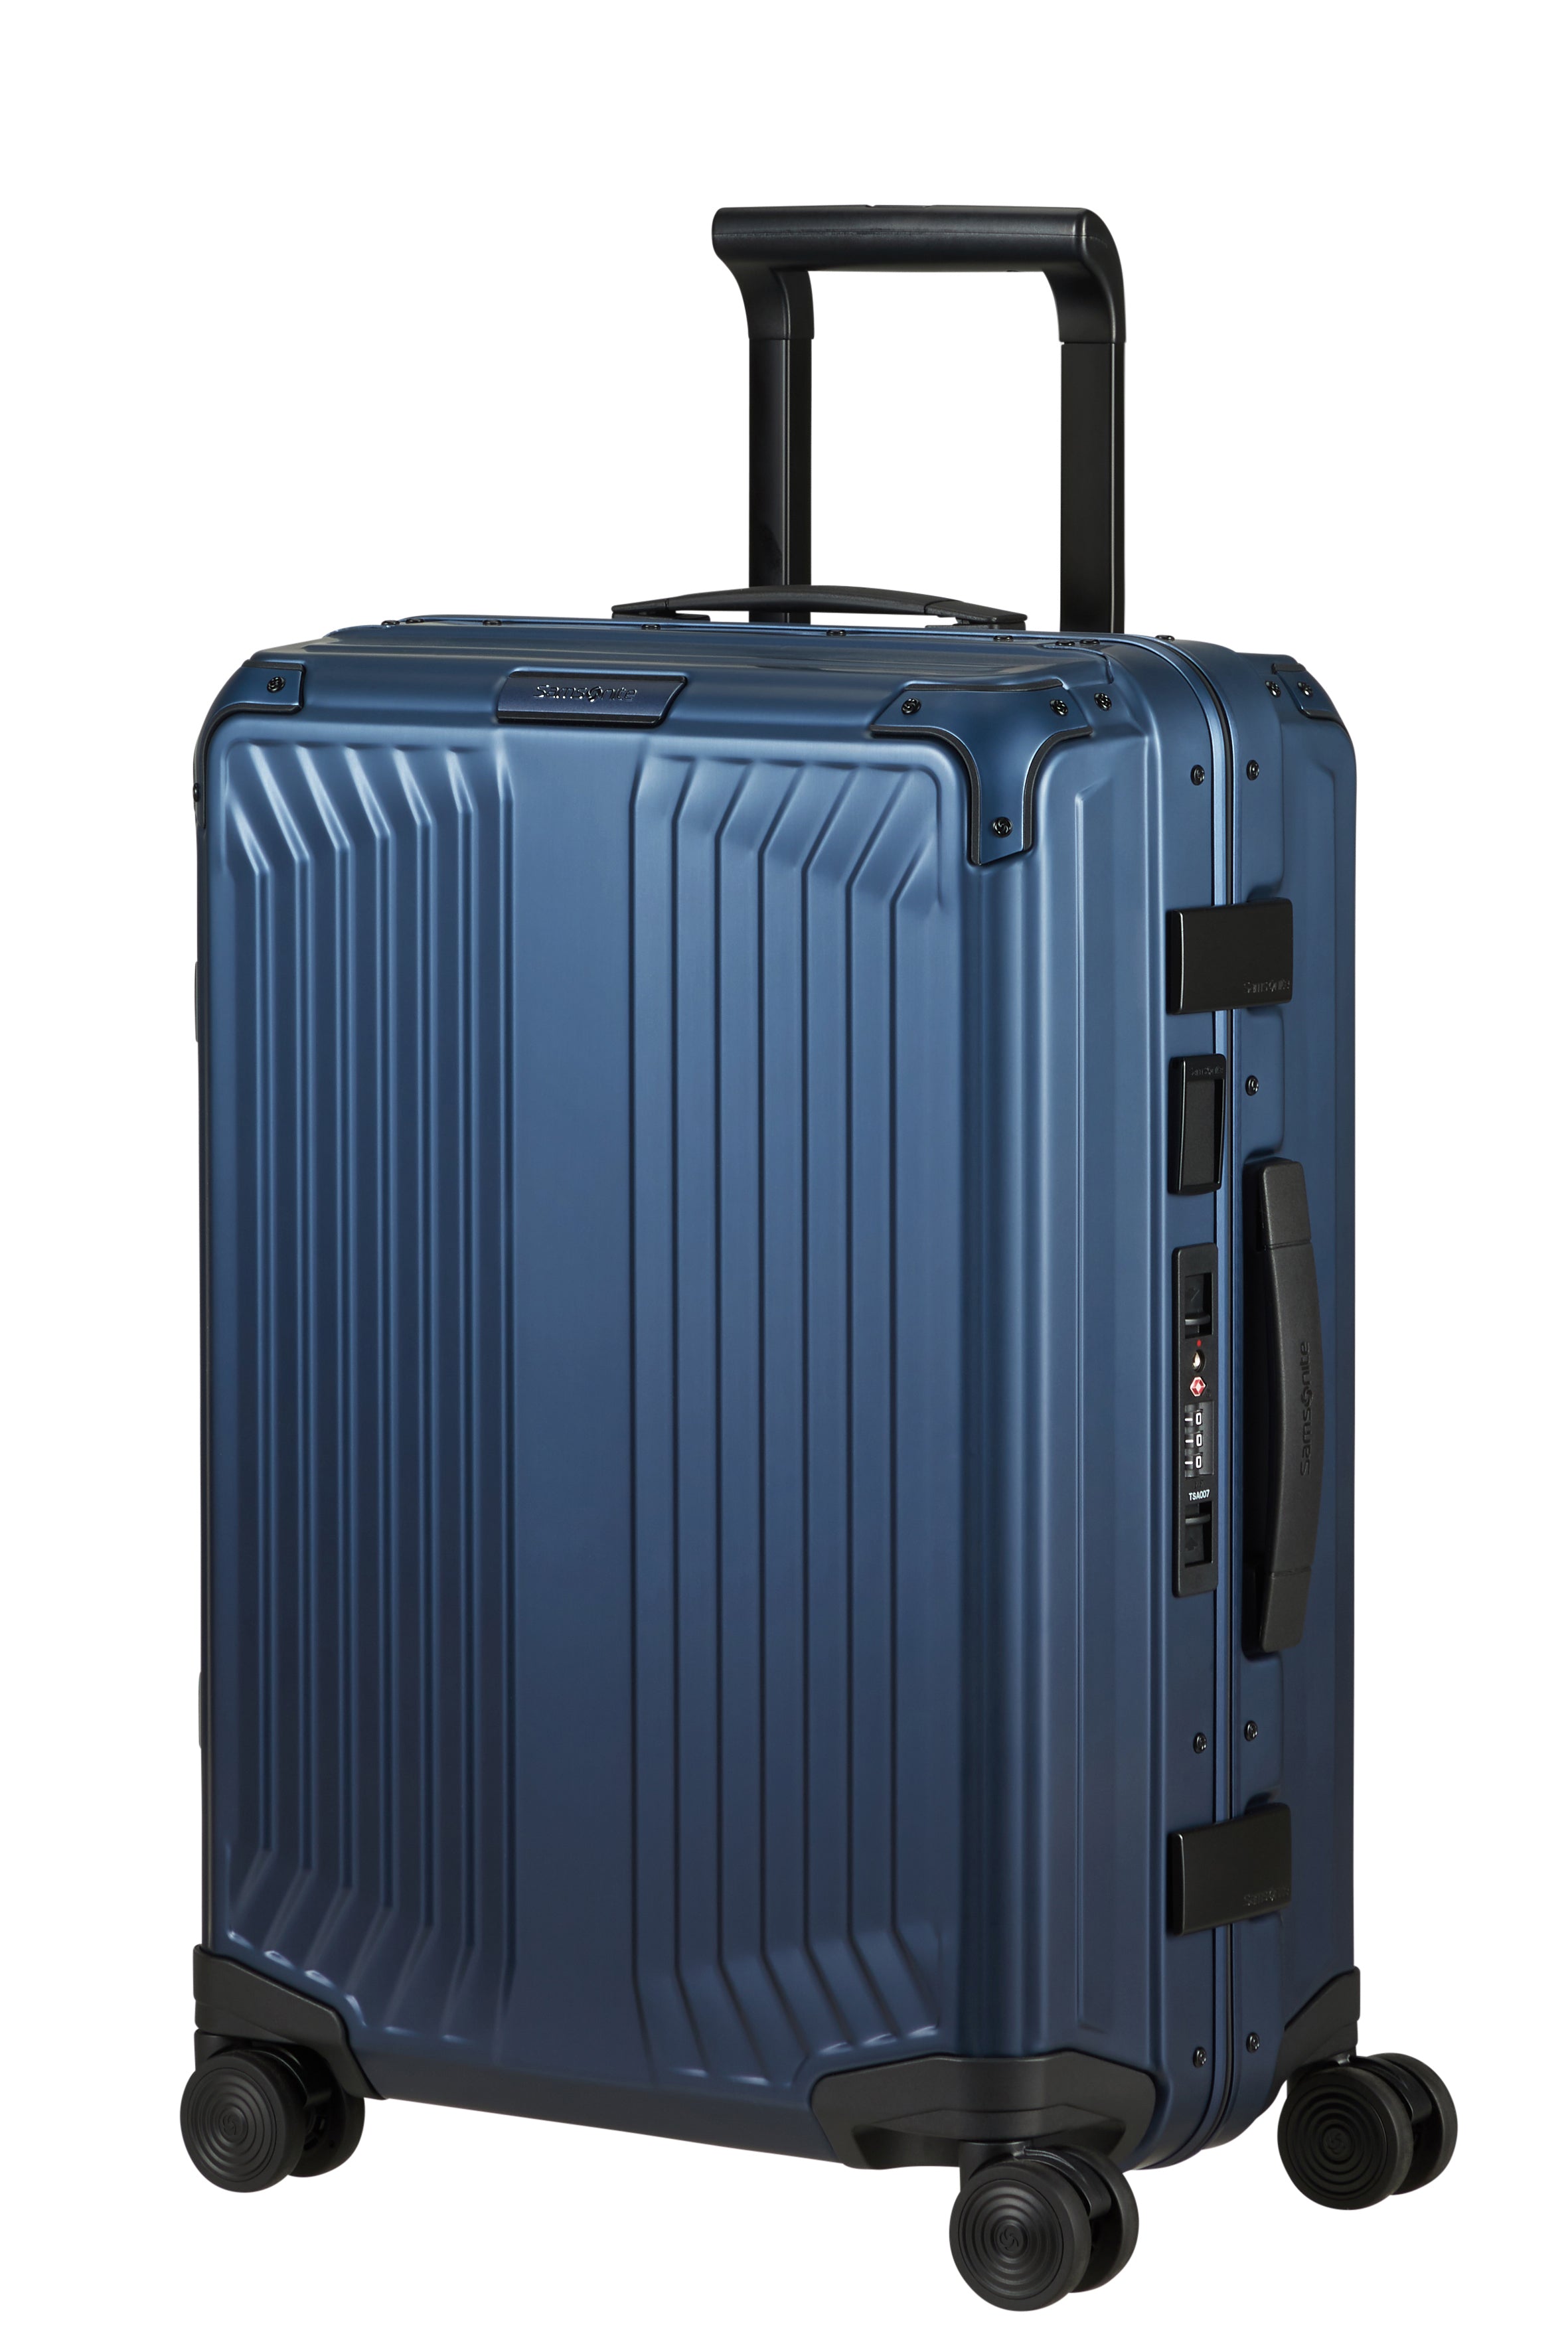 Samsonite - Lite Box ALU 55cm Small 4 Wheel Hard Suitcase - Gradient Midnight-1